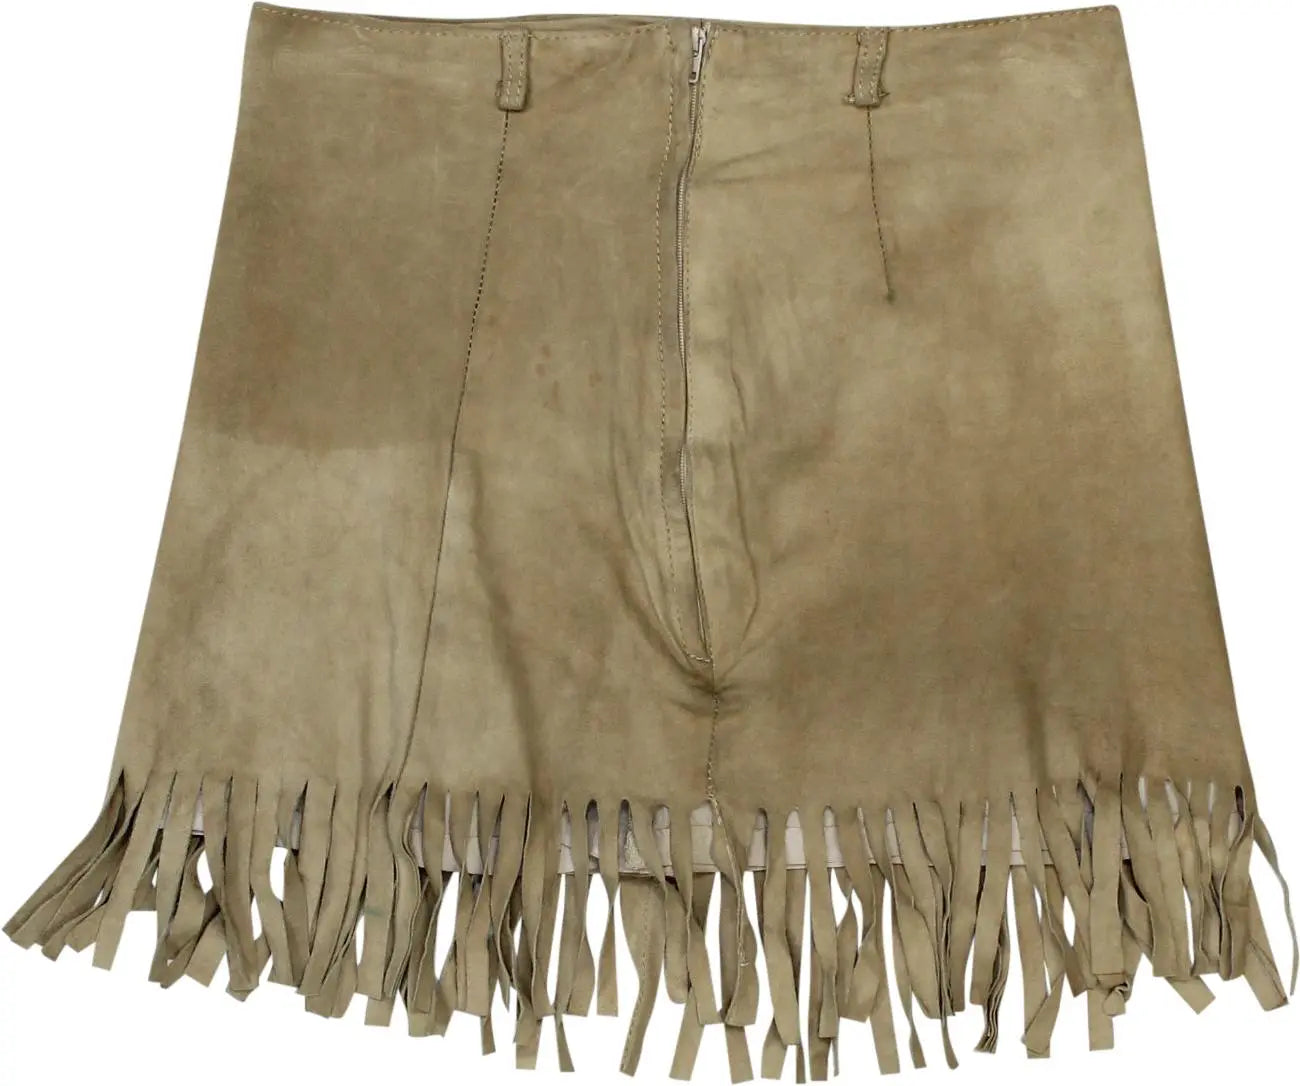 Sylvie Schimmel Paris - Beige Leather Skirt- ThriftTale.com - Vintage and second handclothing